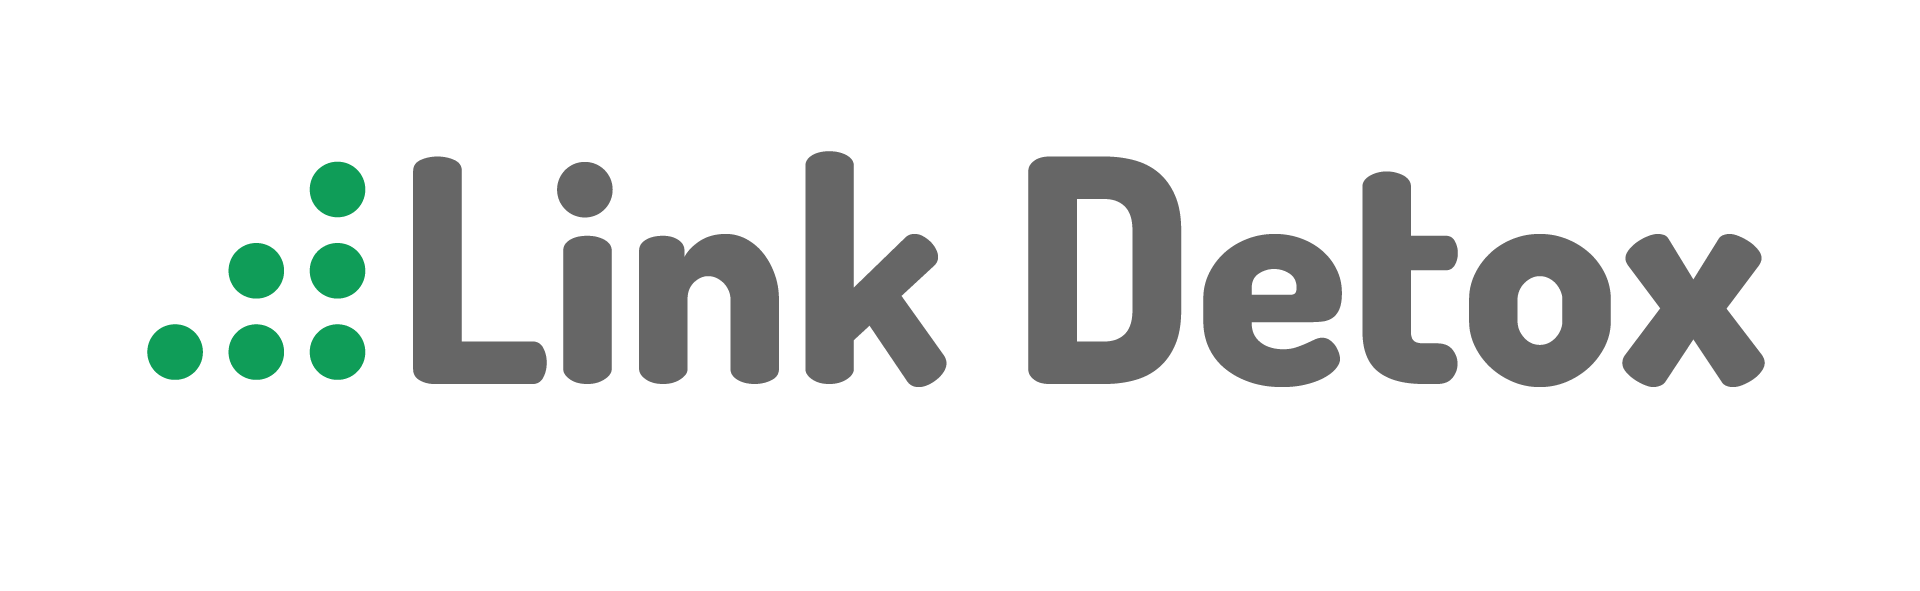 LinkDetox Logo